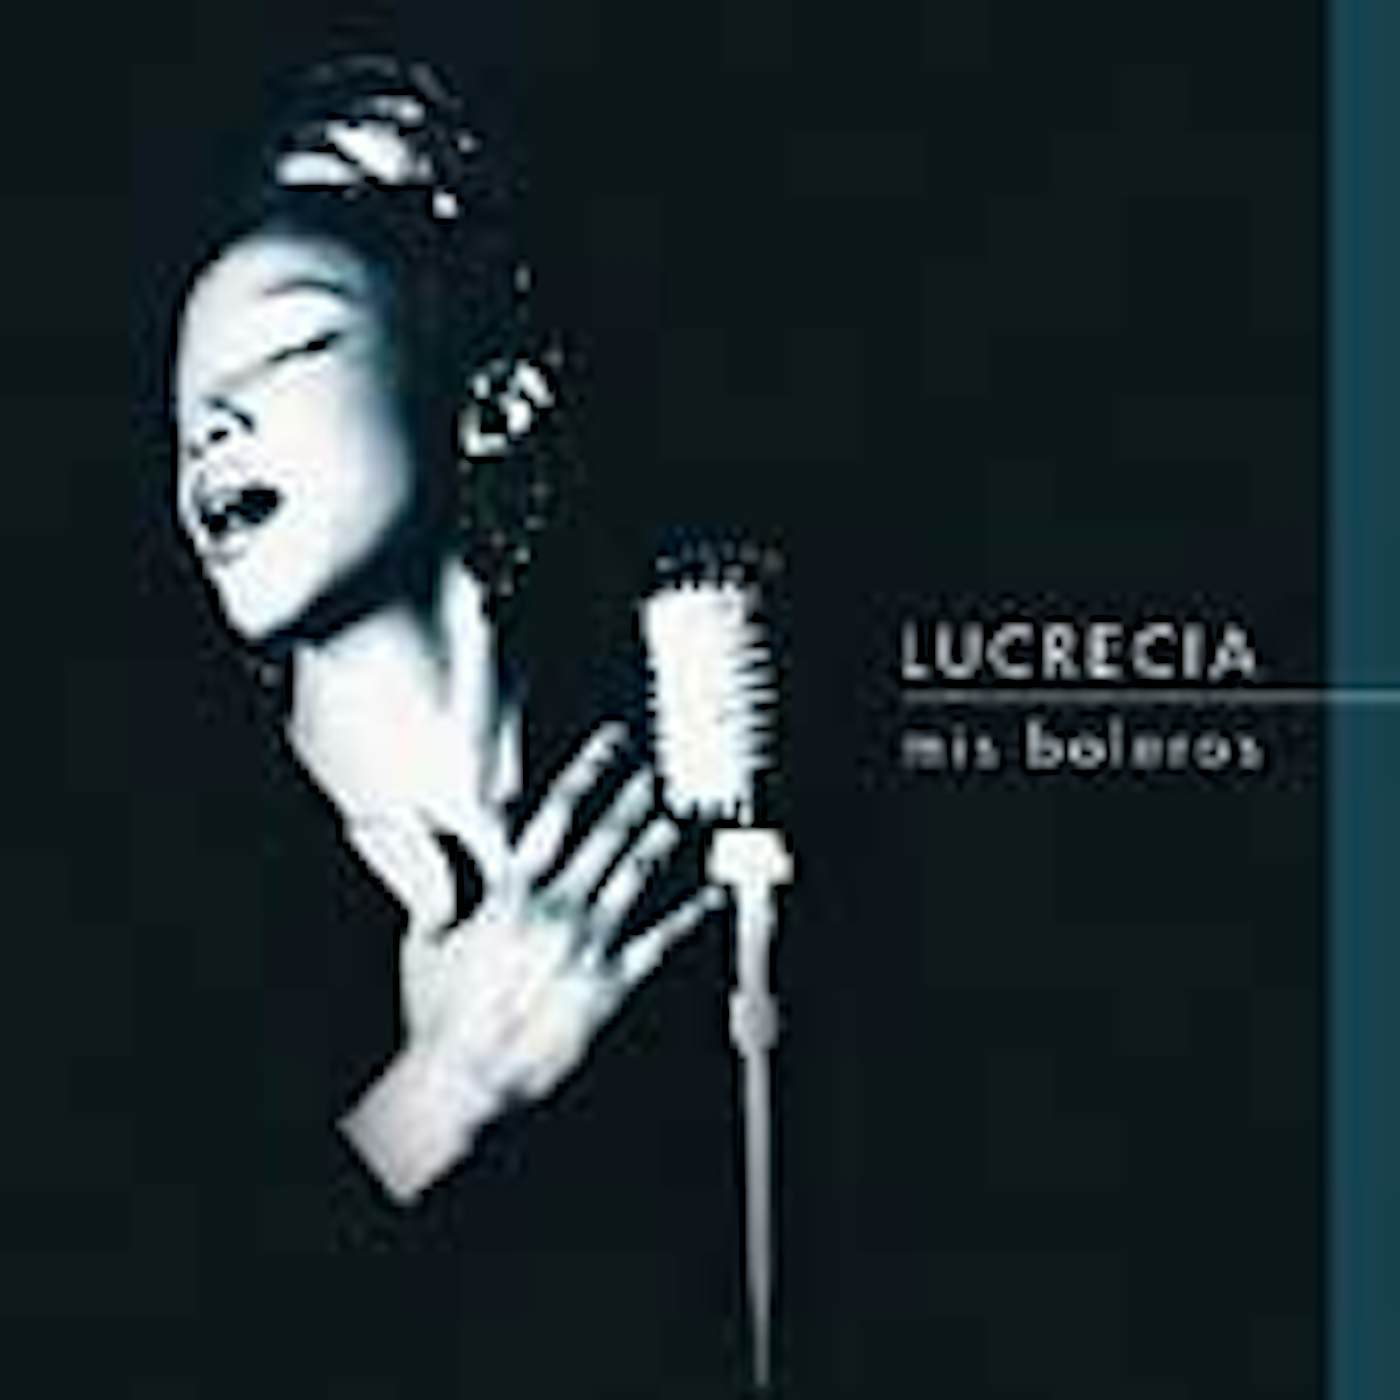 Lucrecia MIS BOLEROS CD